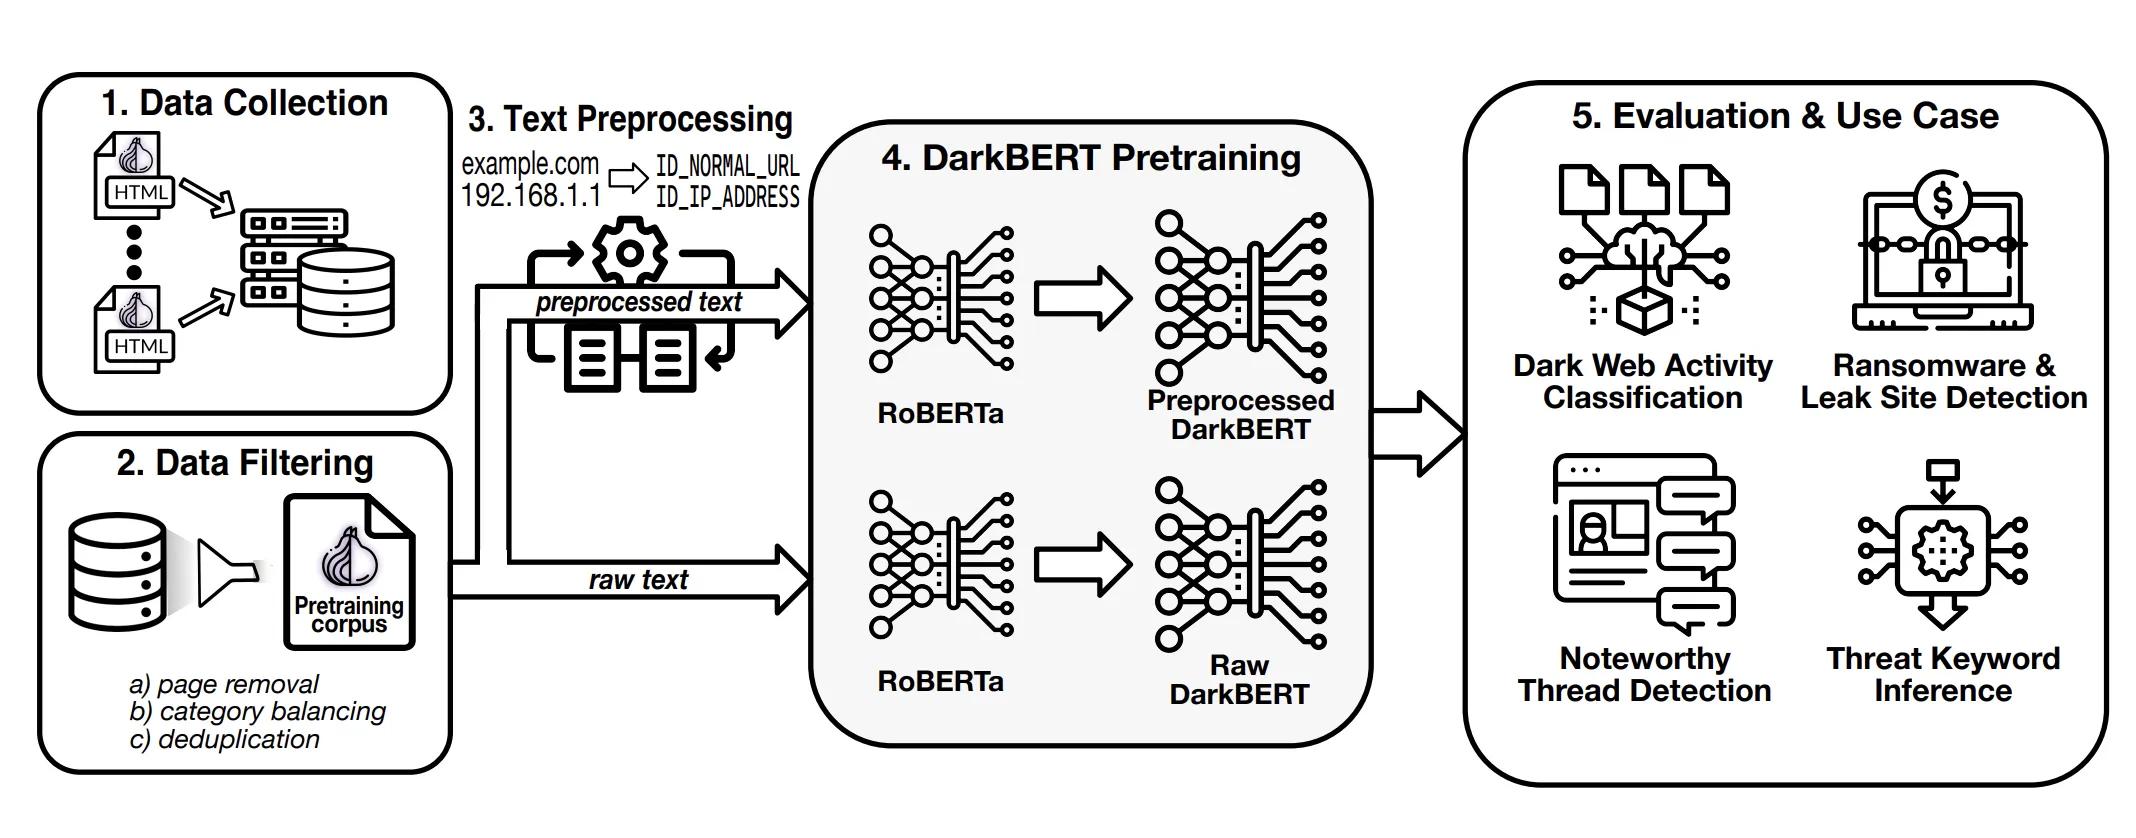 DarkBert operation example